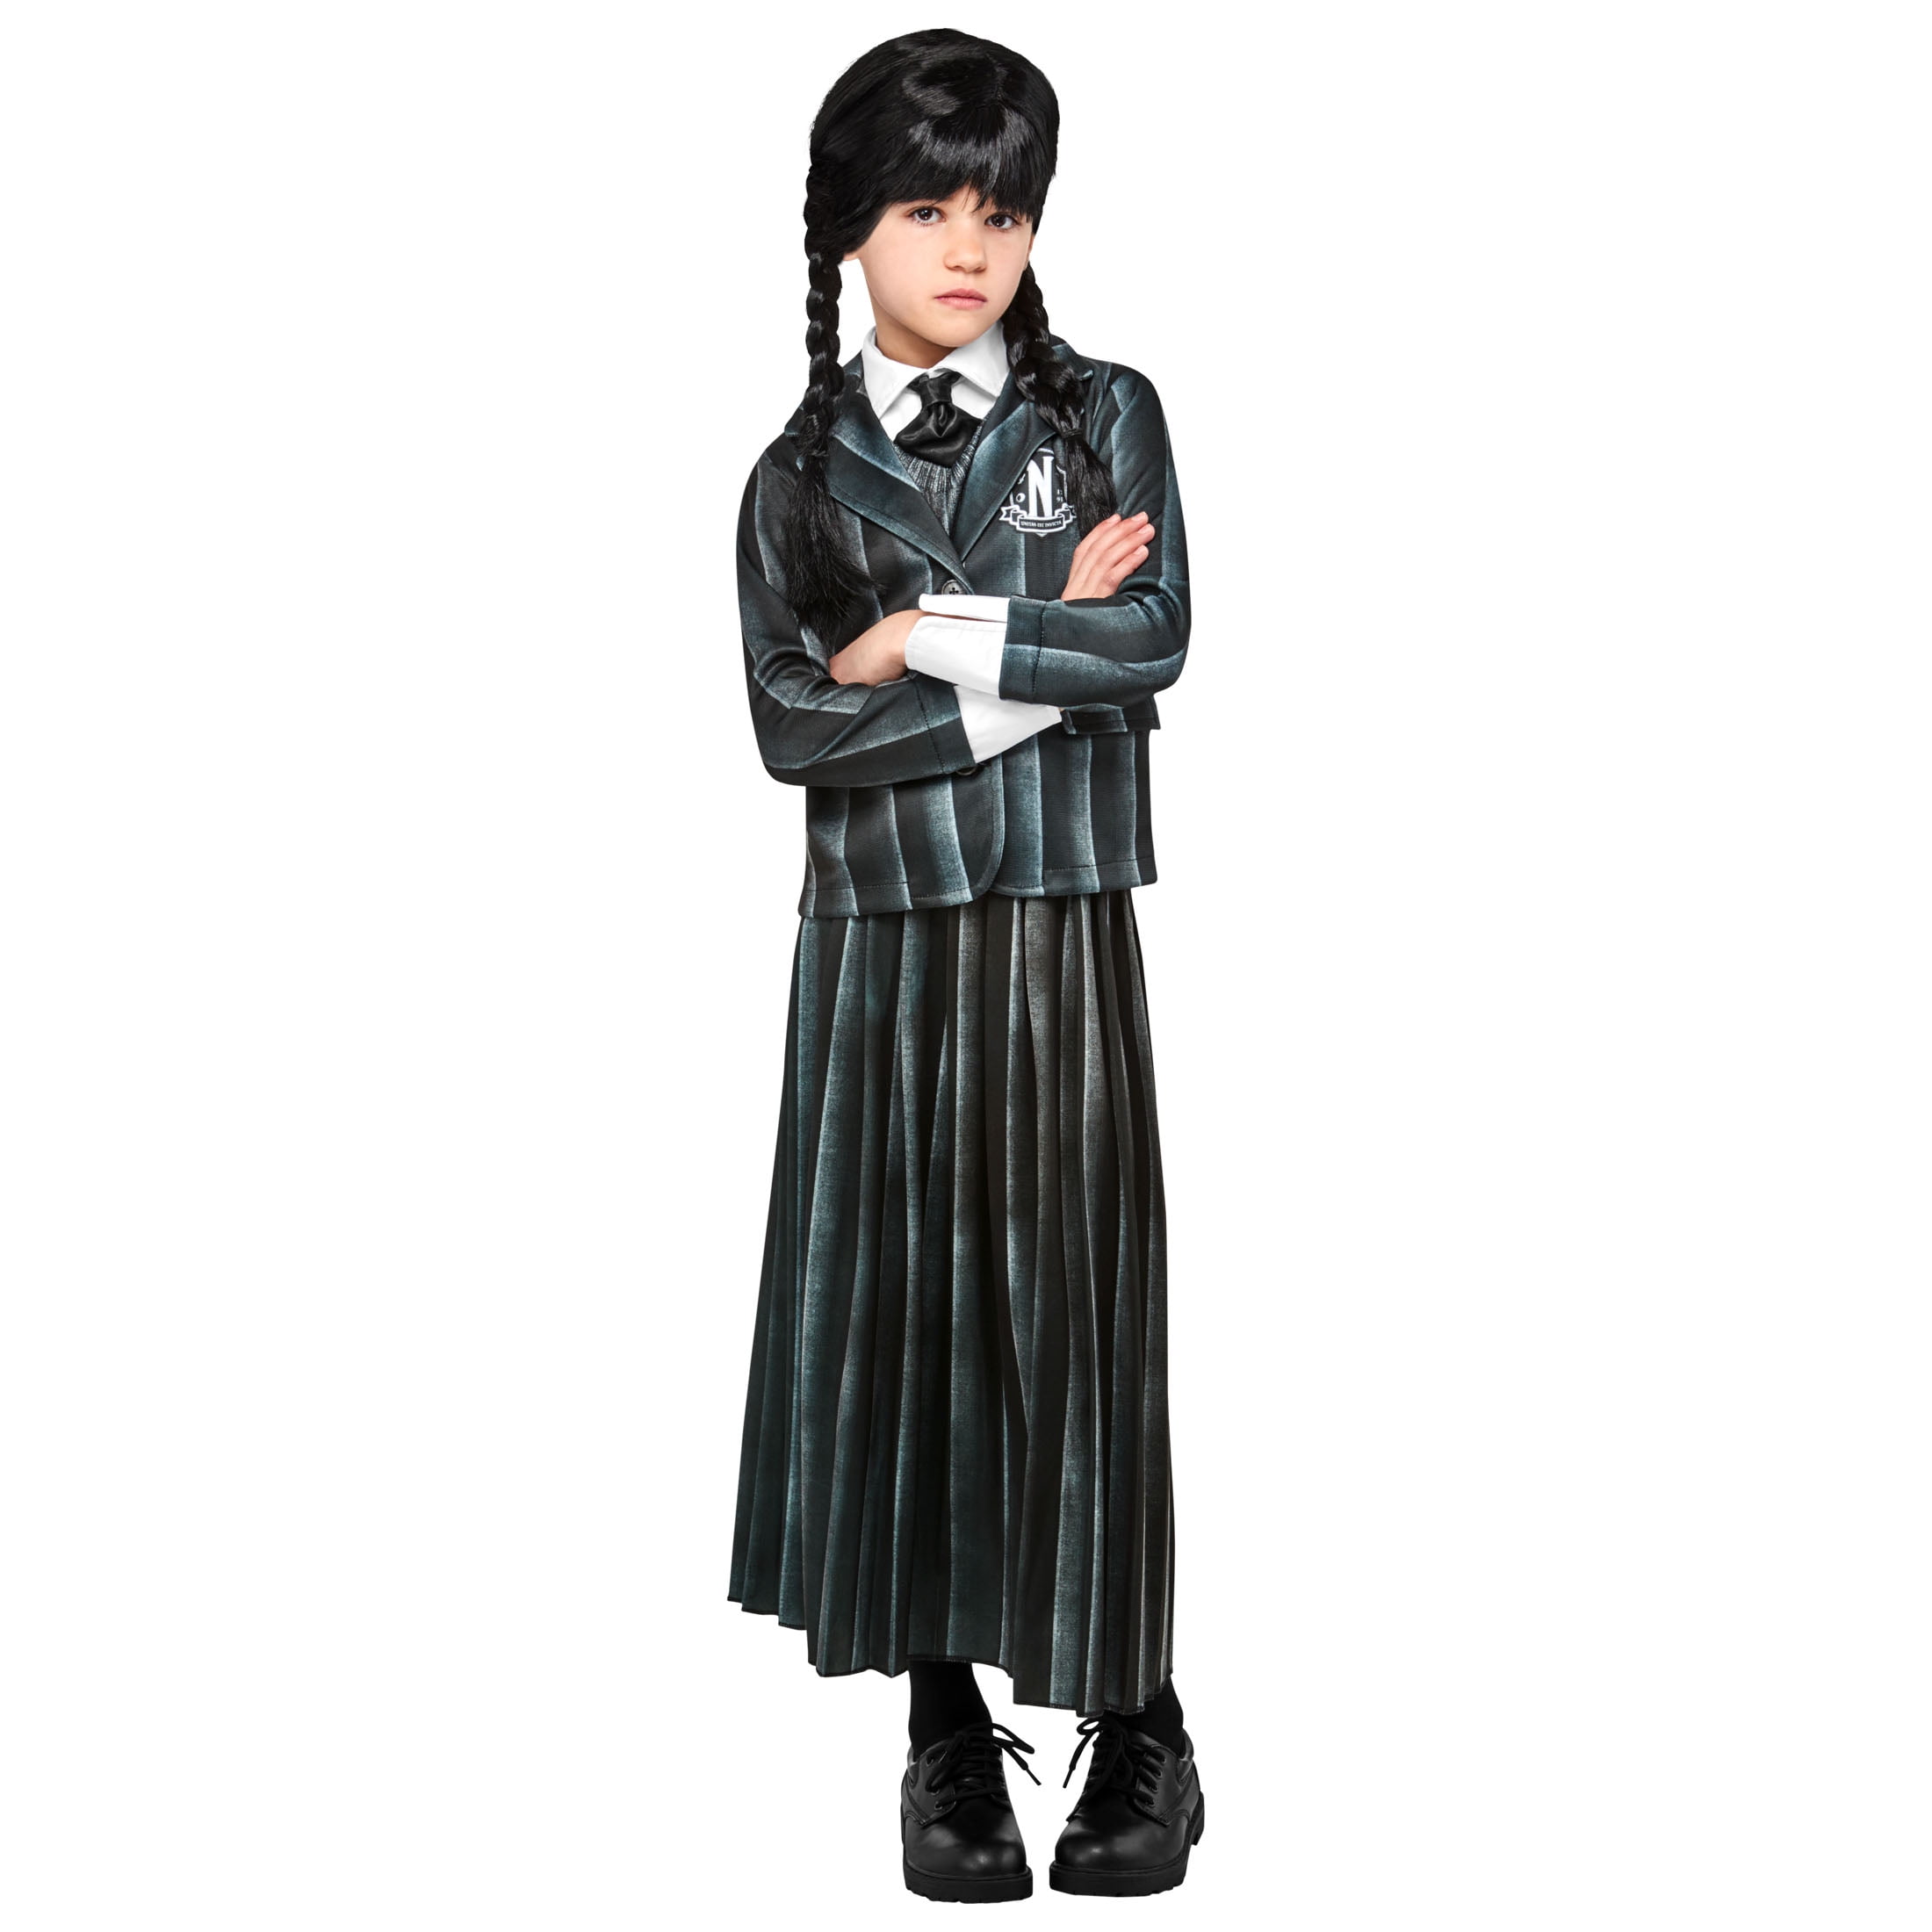 Wednesday Addams Girls Halloween Costume L by Rubies II - Walmart.com